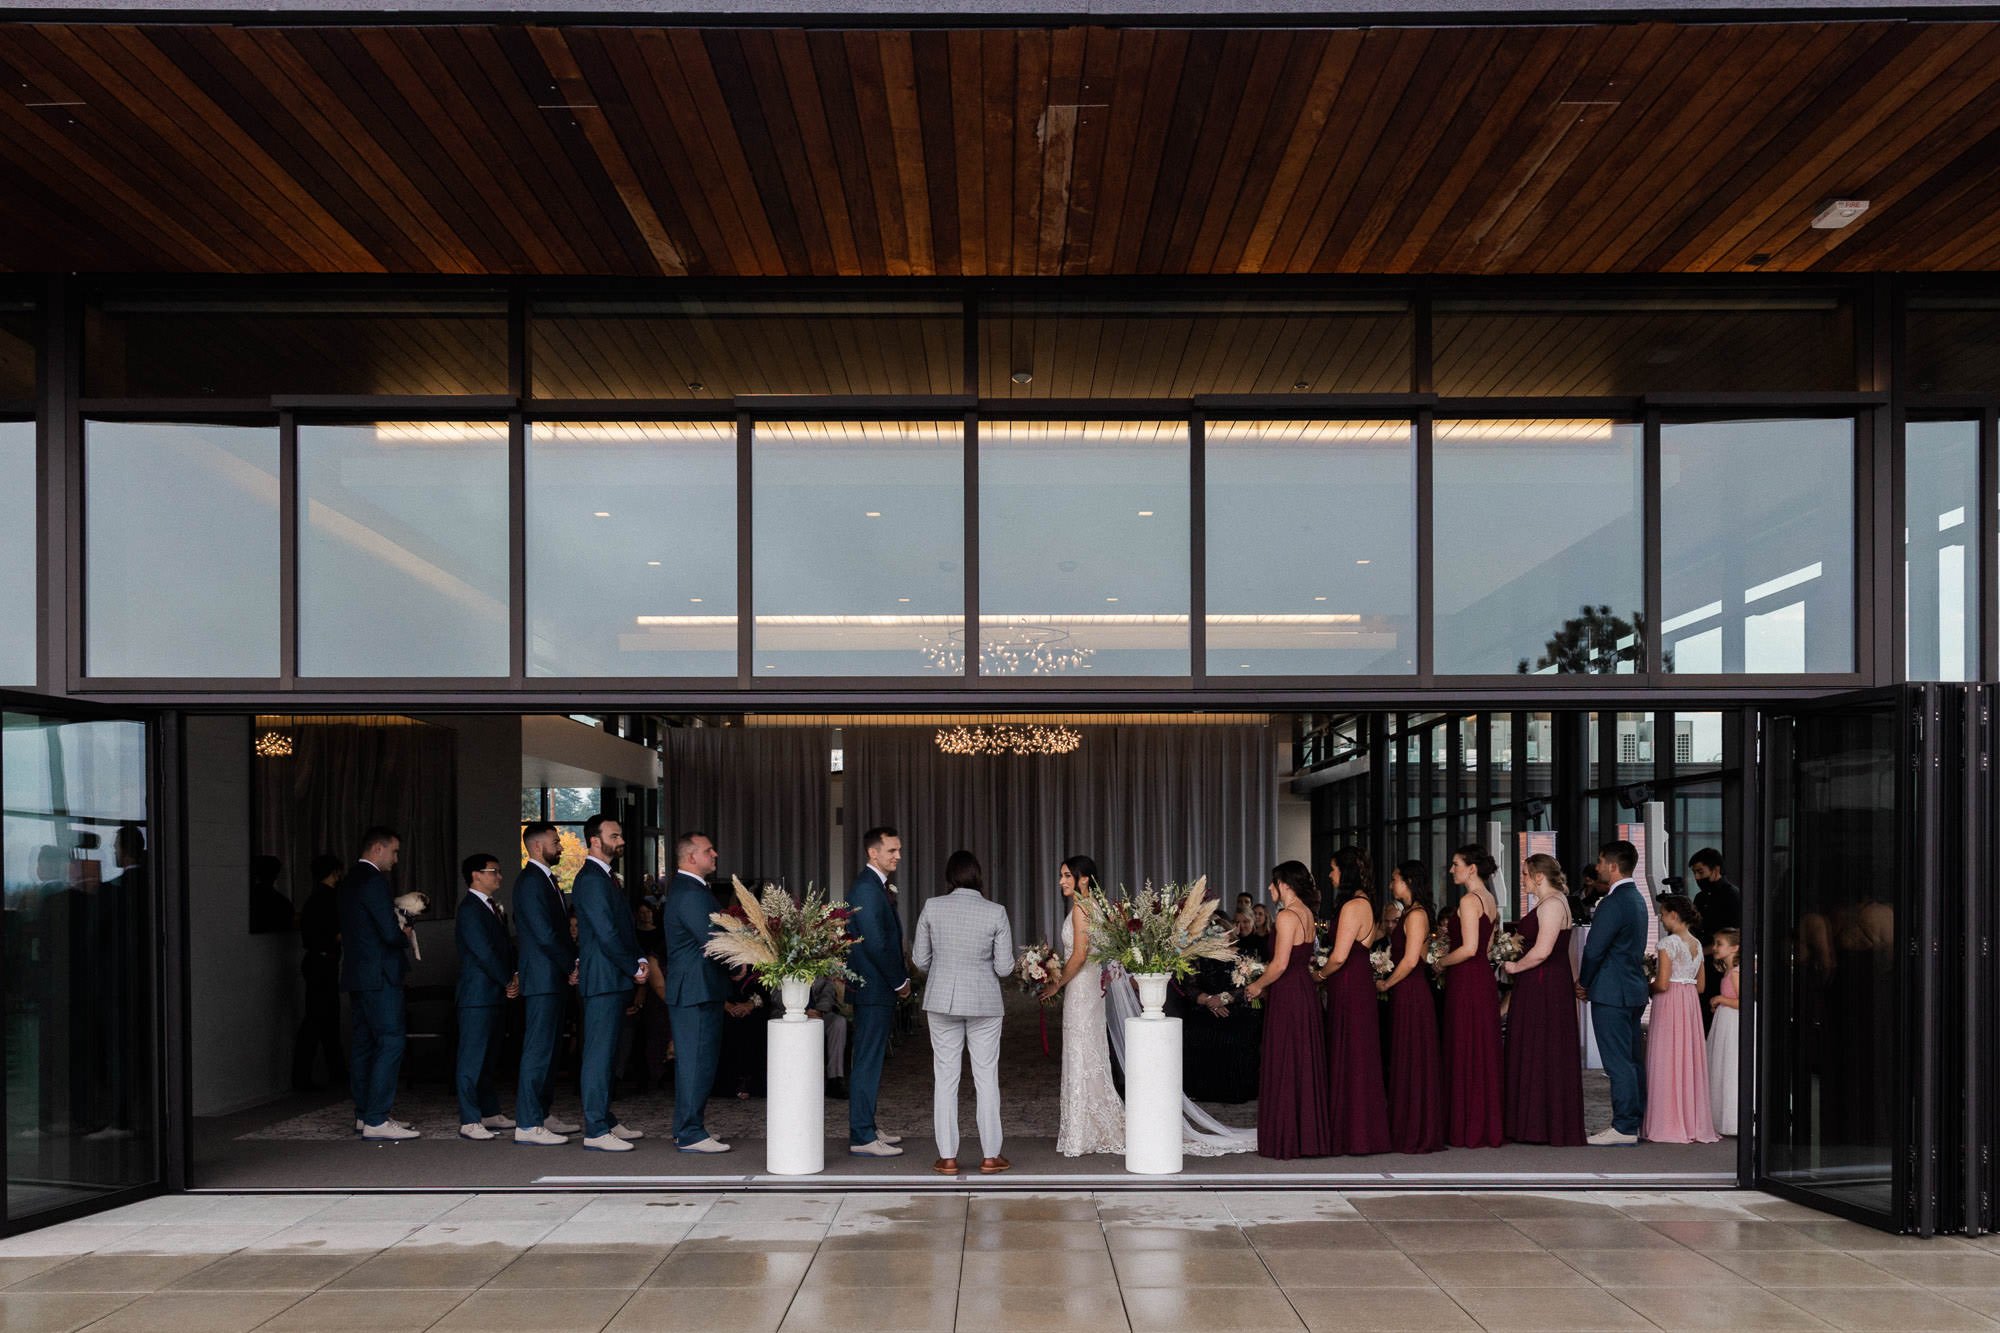 view of wedding ceremony from balcony at ironlight wedding venue in lake oswego, oregon